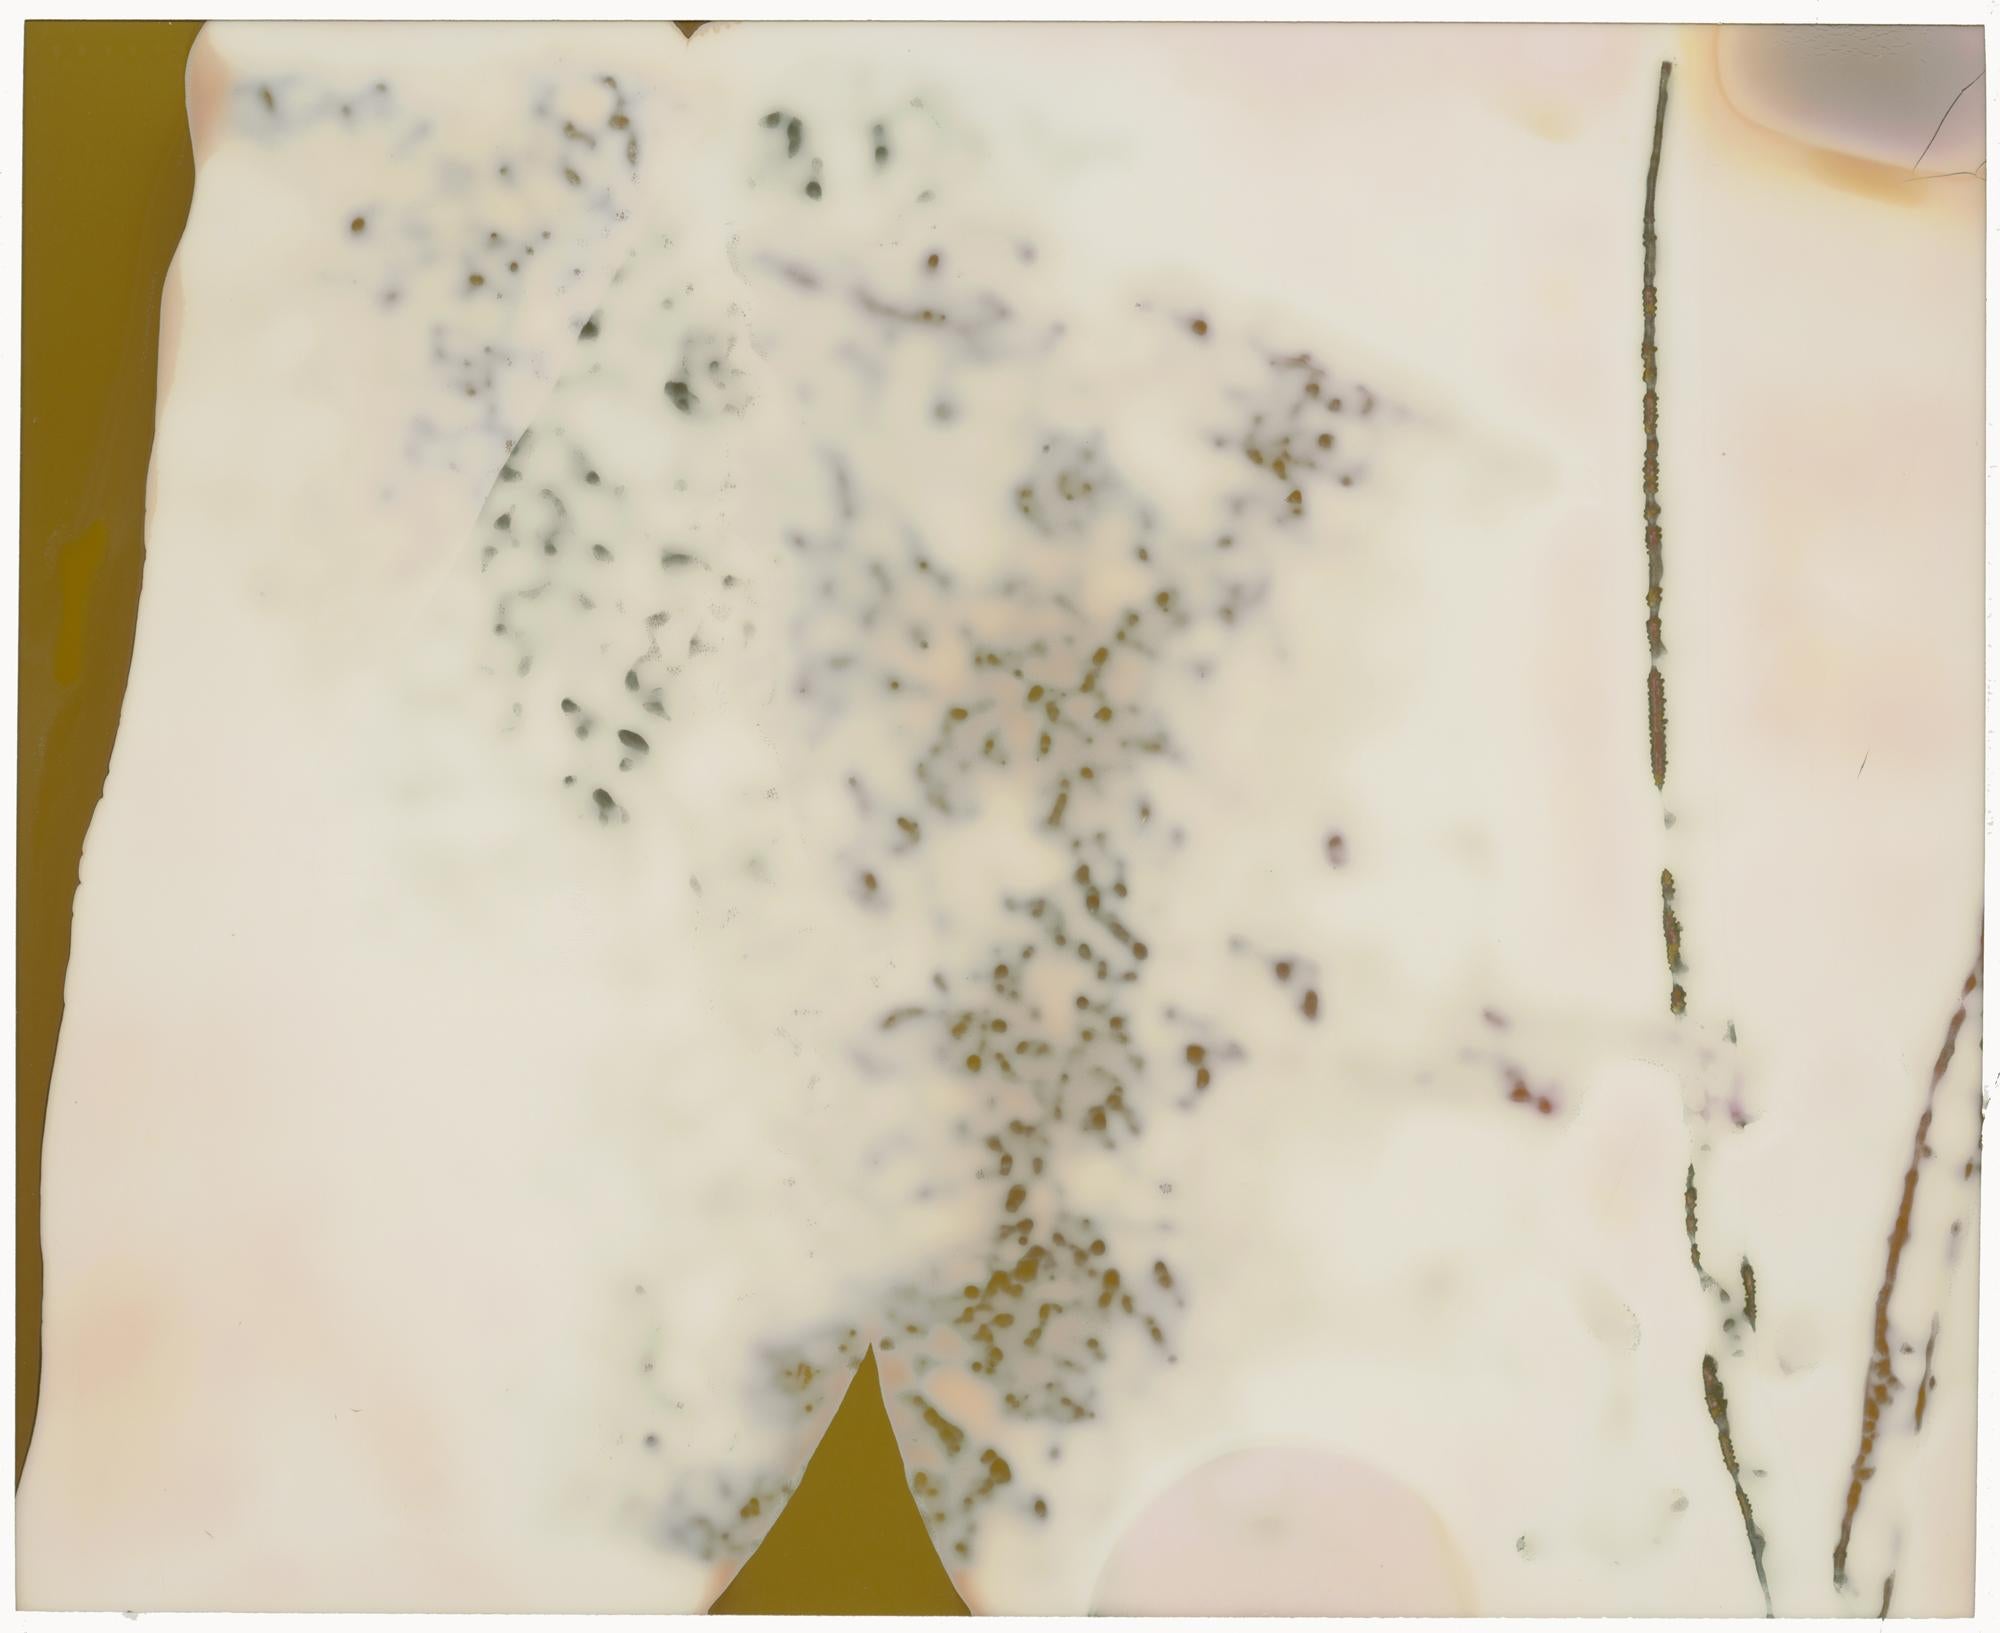 Stefanie Schneider Abstract Photograph - Revisions (Deconstructivism) - Contemporary, Expired Polaroid